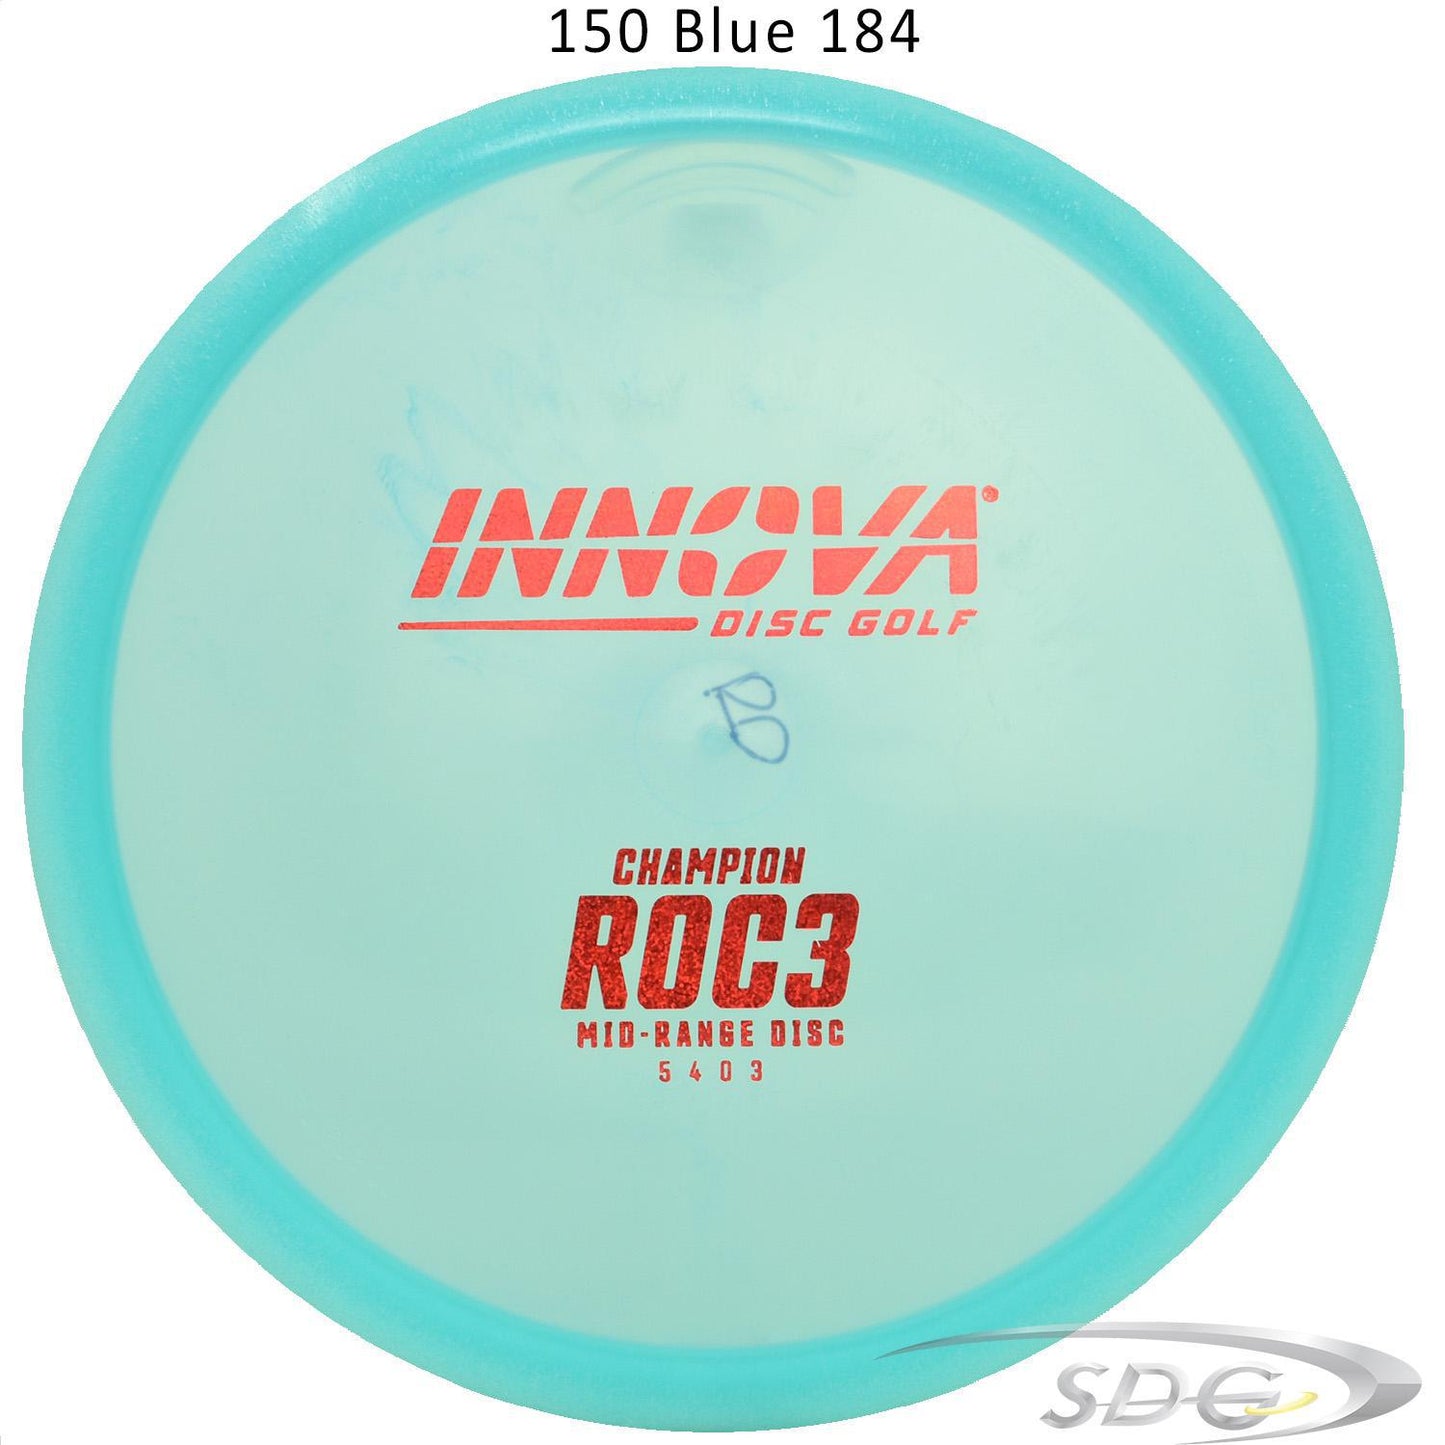 innova-champion-roc3-disc-golf-mid-range 150 Blue184 